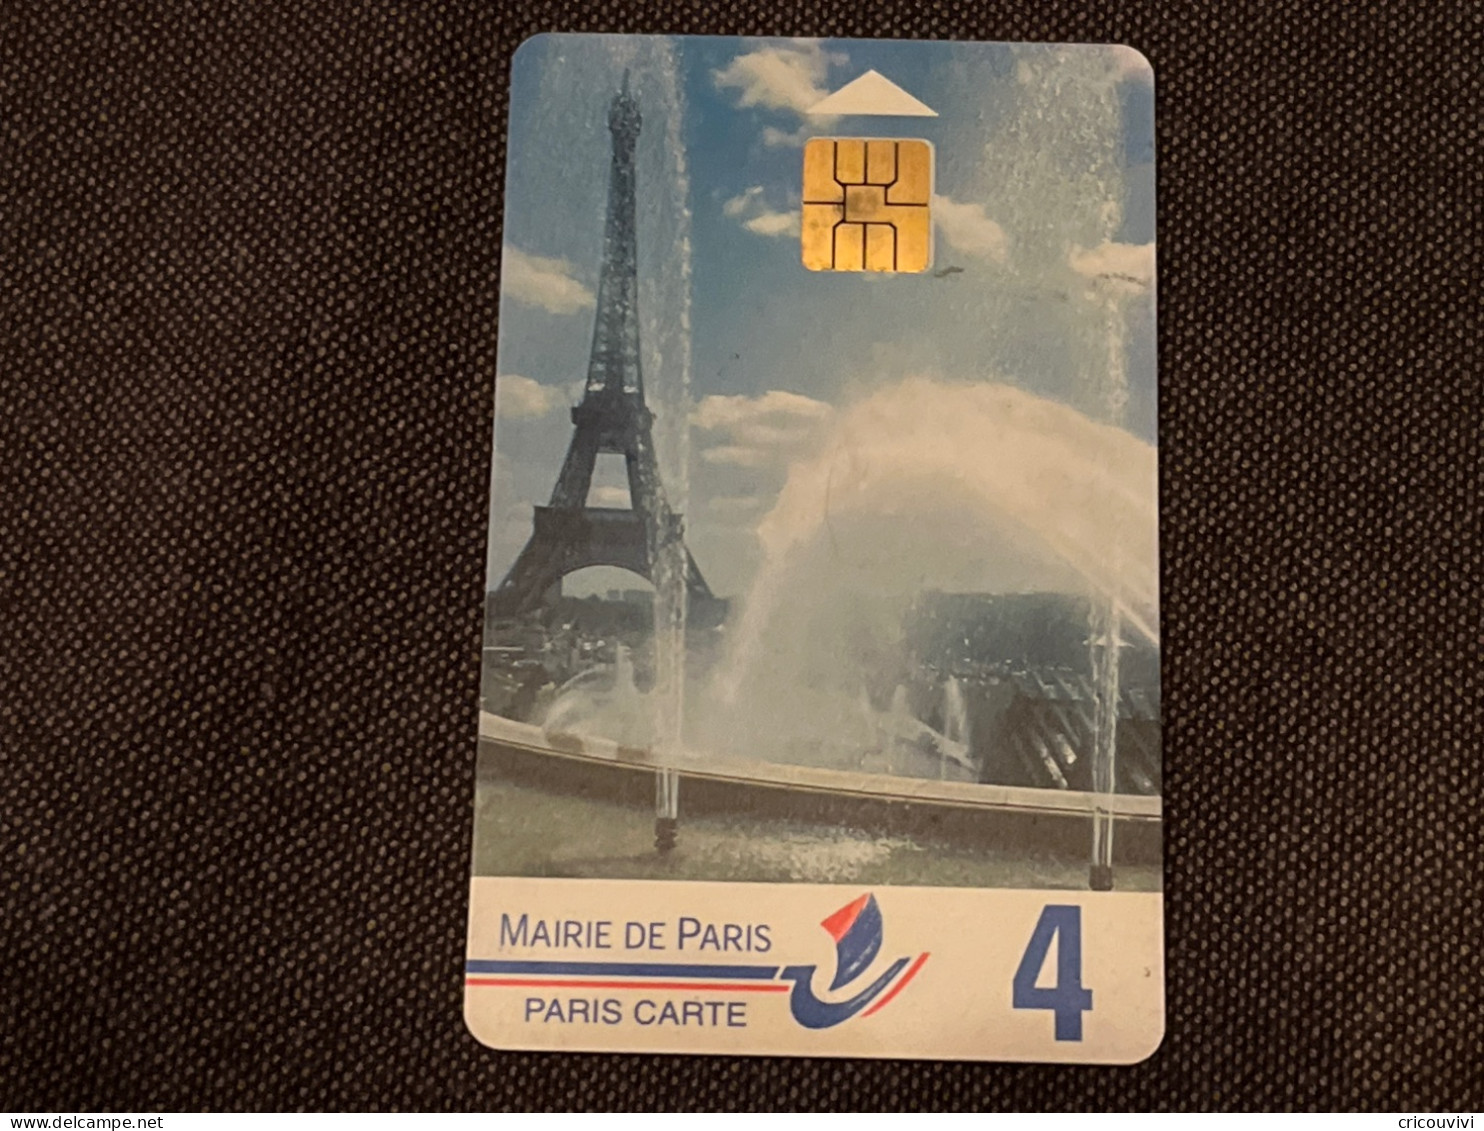 Paris Carte 15 - Parkkarten